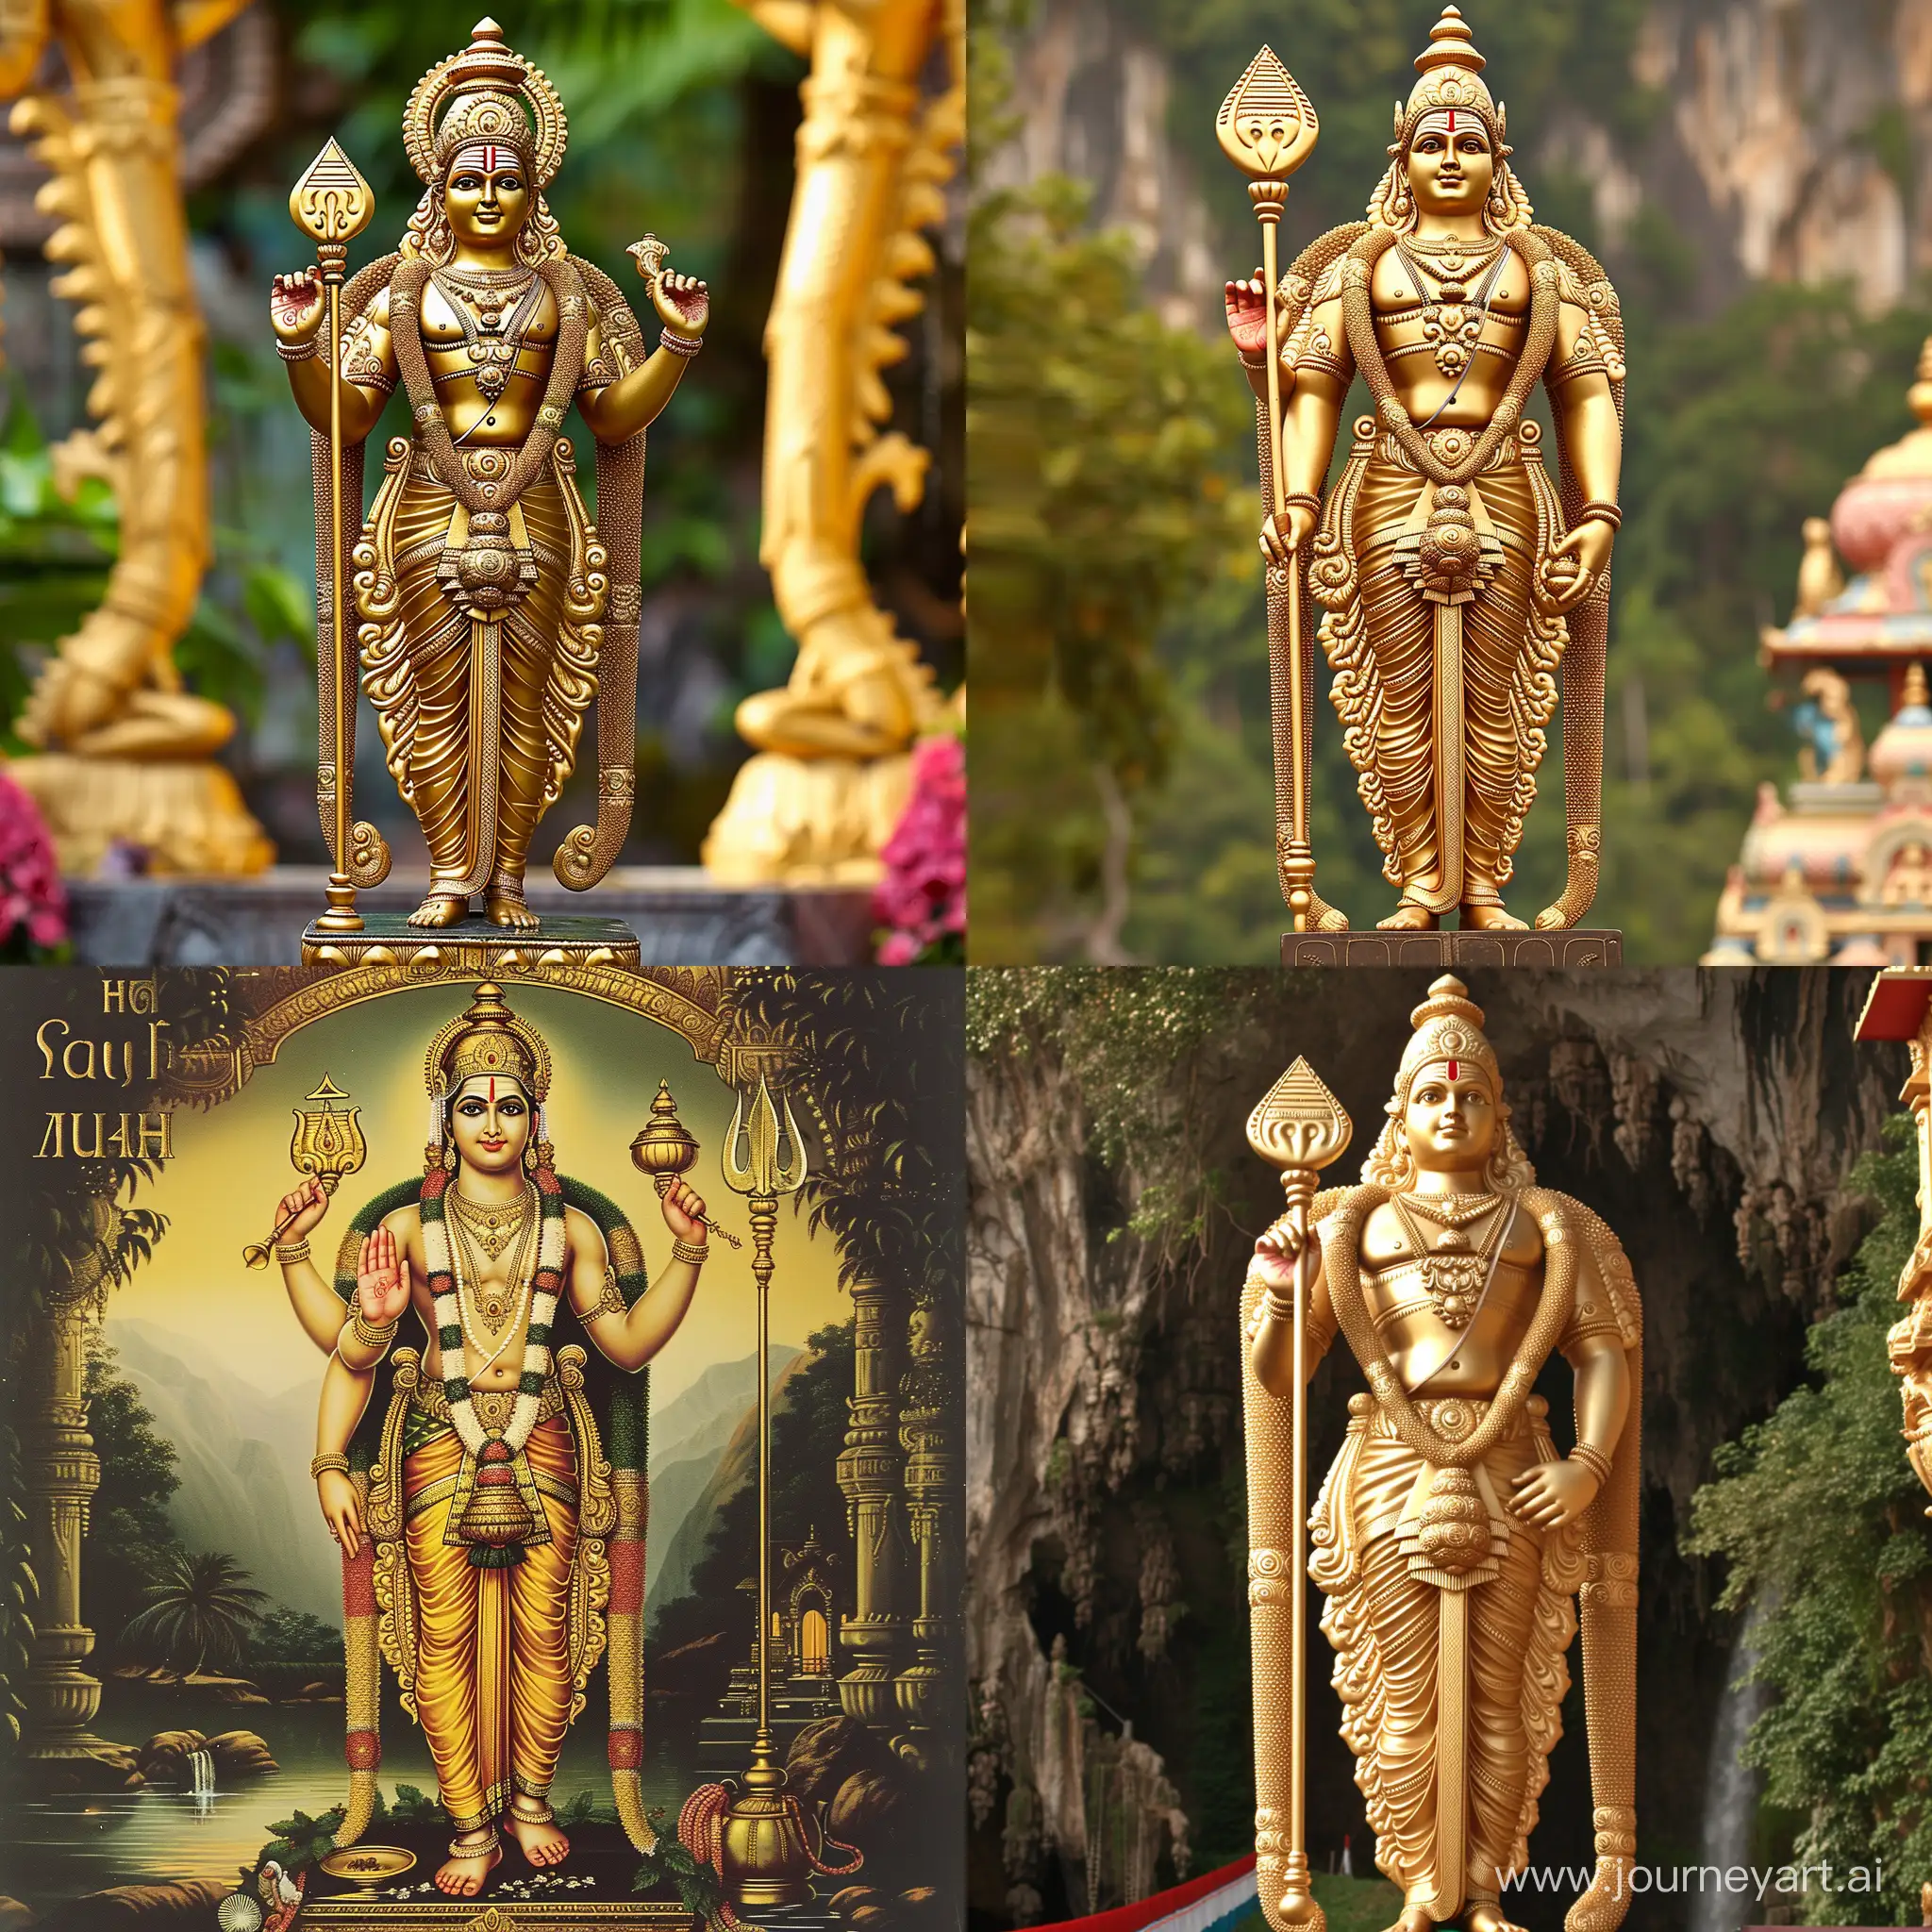 Divine-Representation-of-God-Murugan-in-Artistic-11-Aspect-Ratio